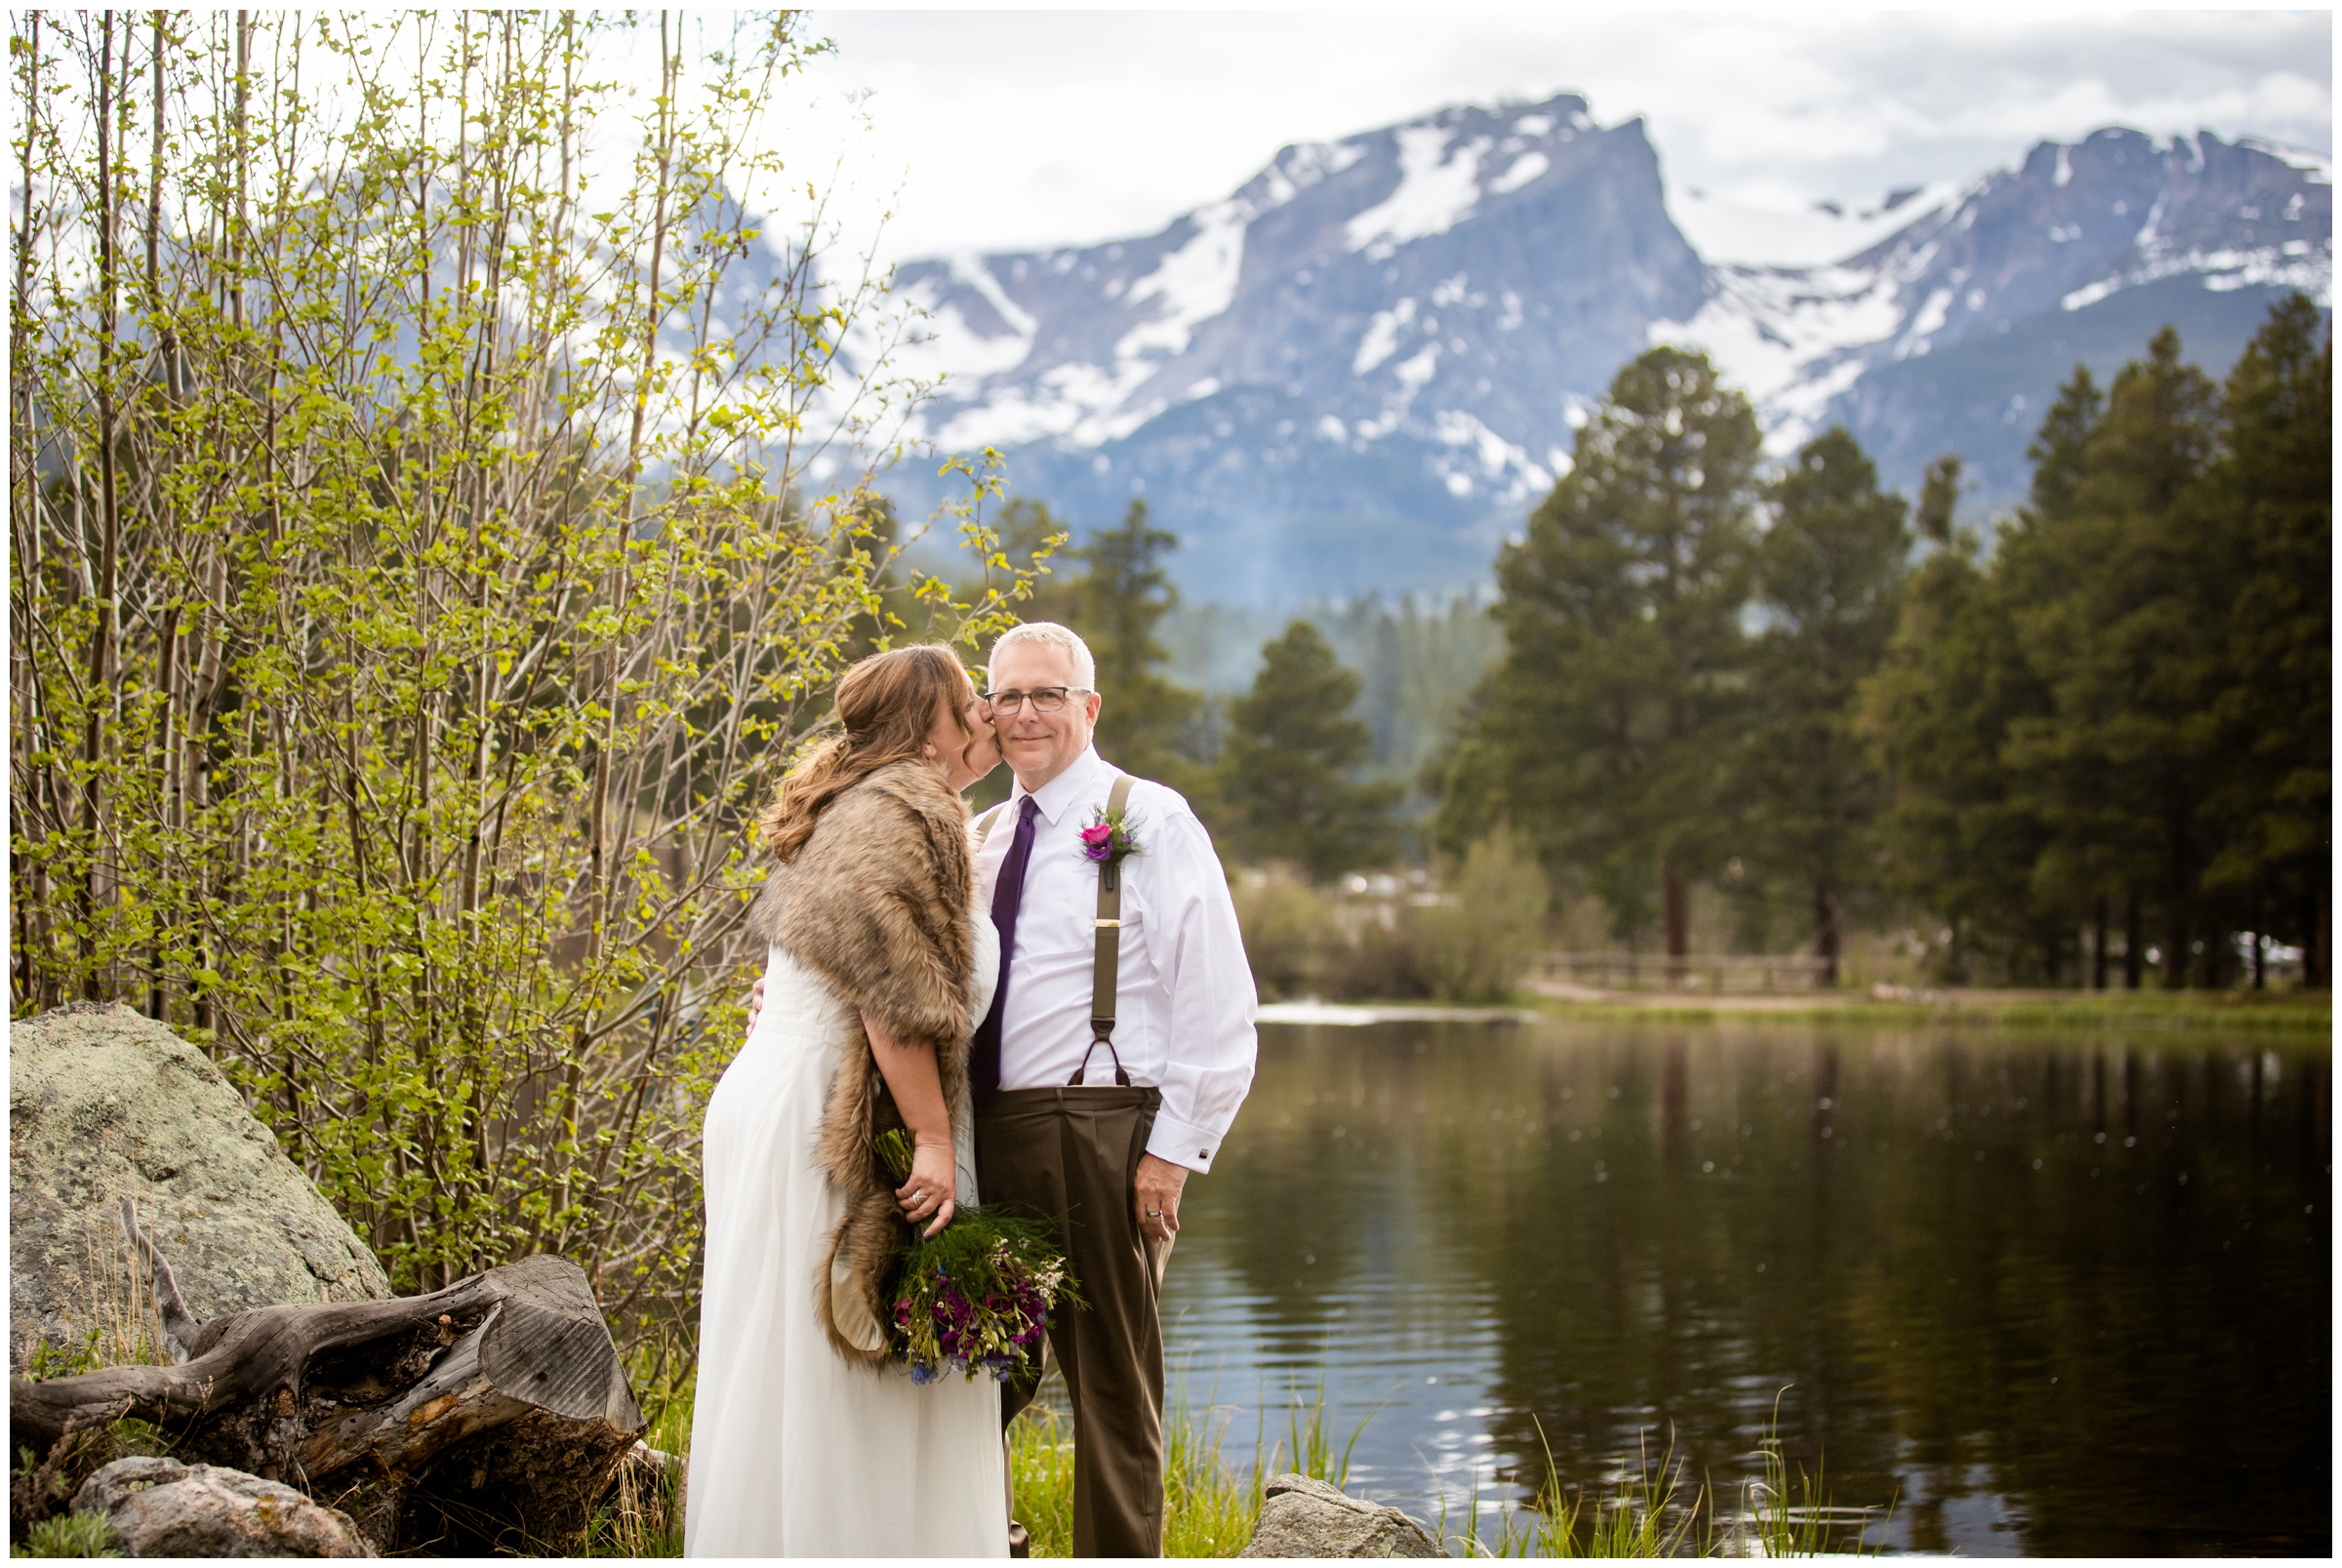 RMNP elopement wedding photos at Sprague Lake by Colorado photographer Plum Pretty Photography